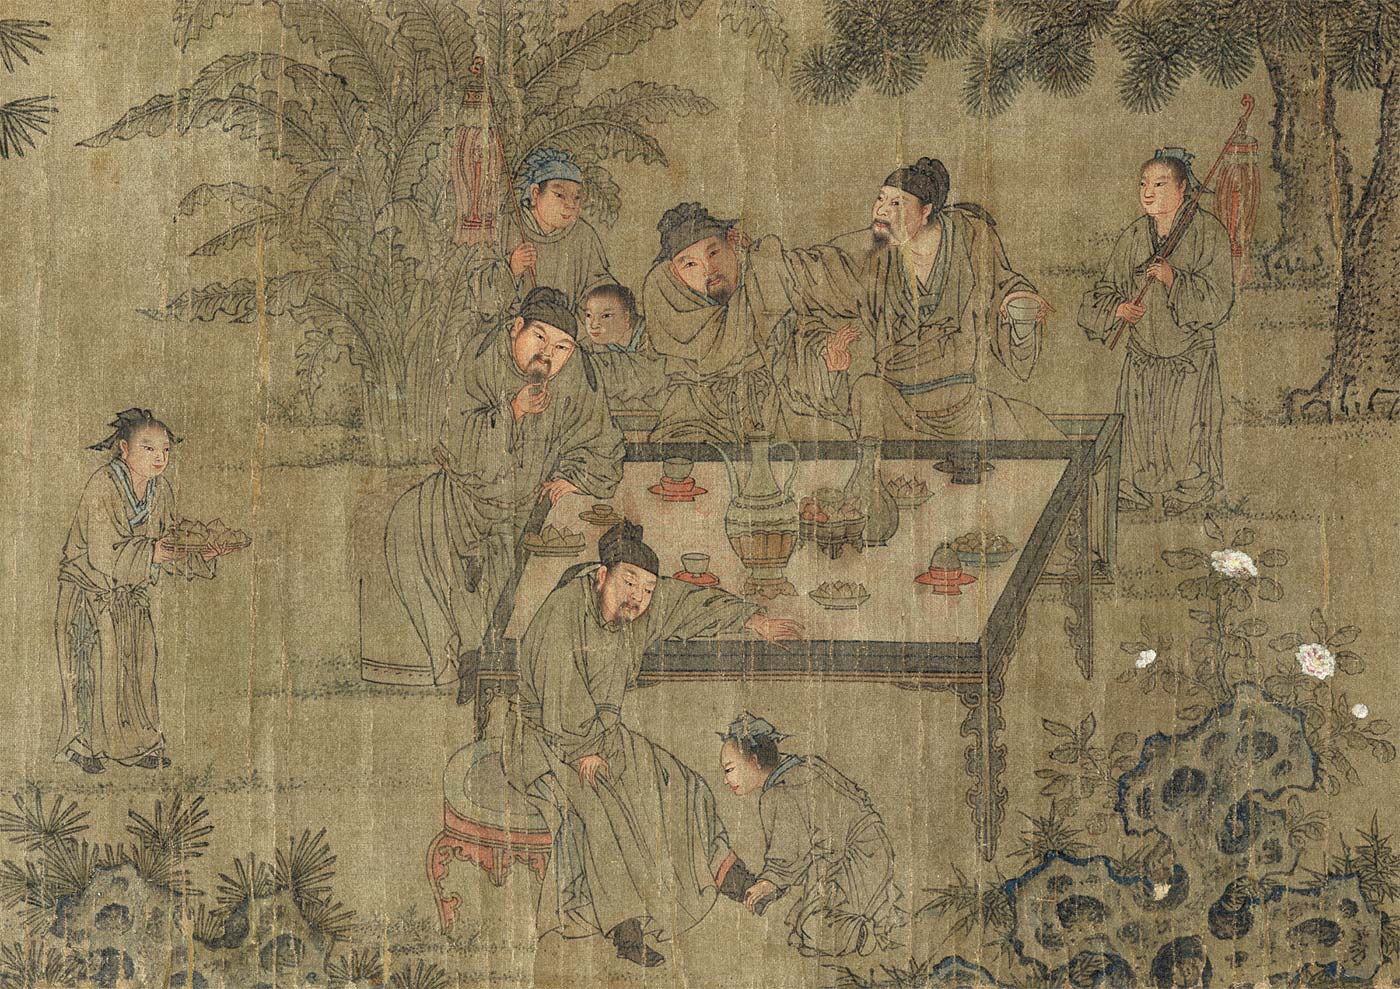 sung dynasty art